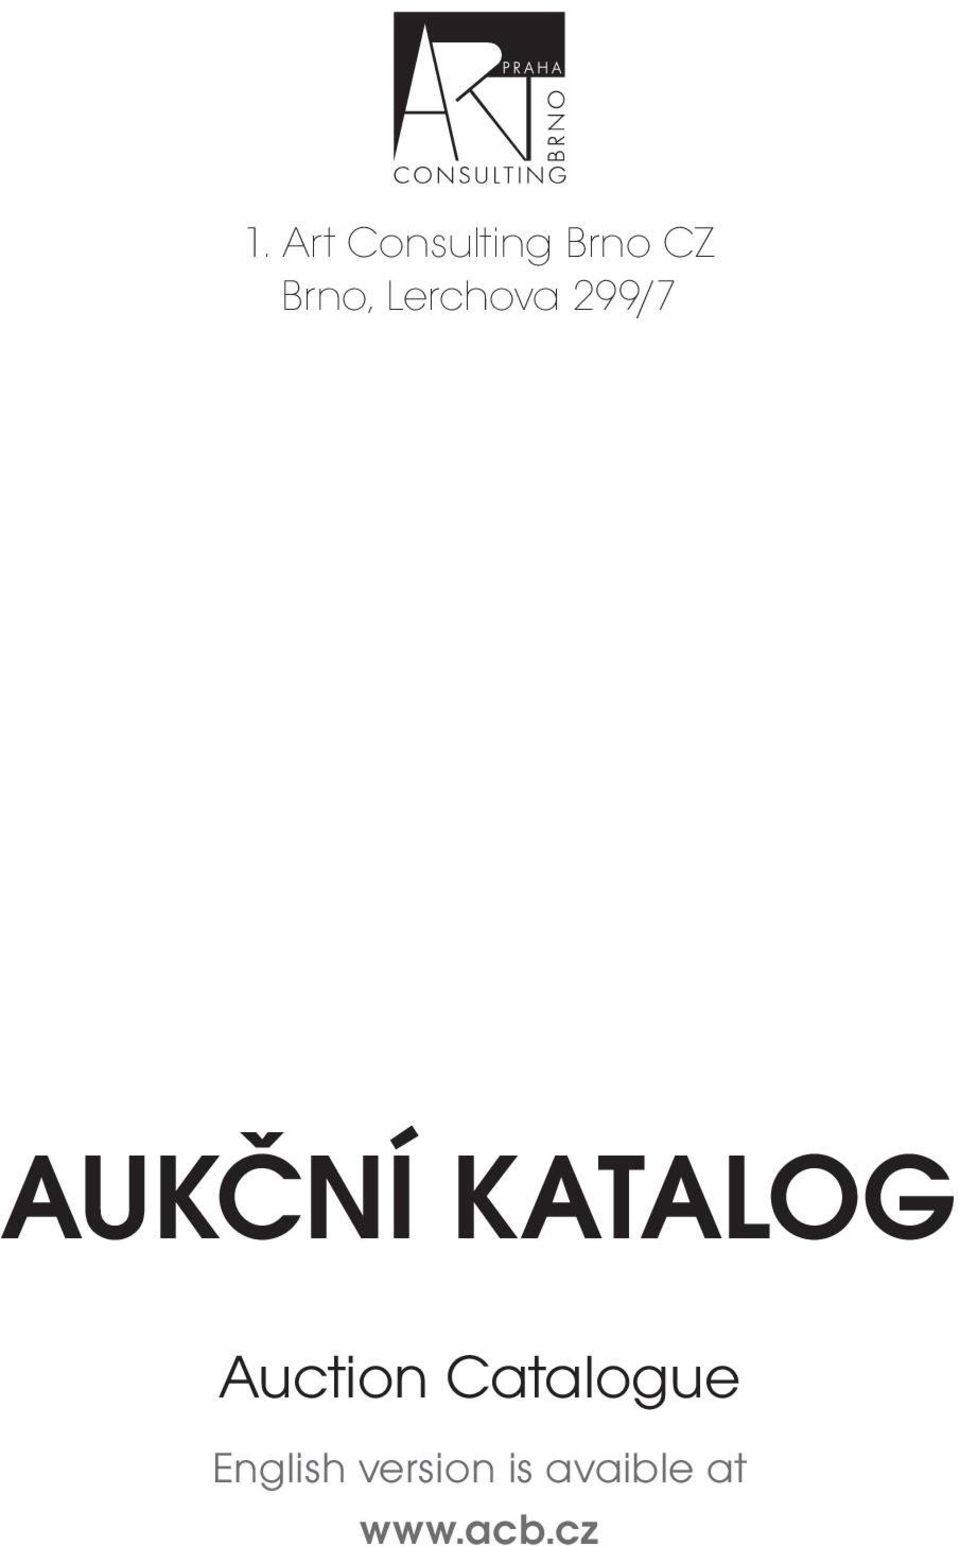 KATALOG Auction Catalogue